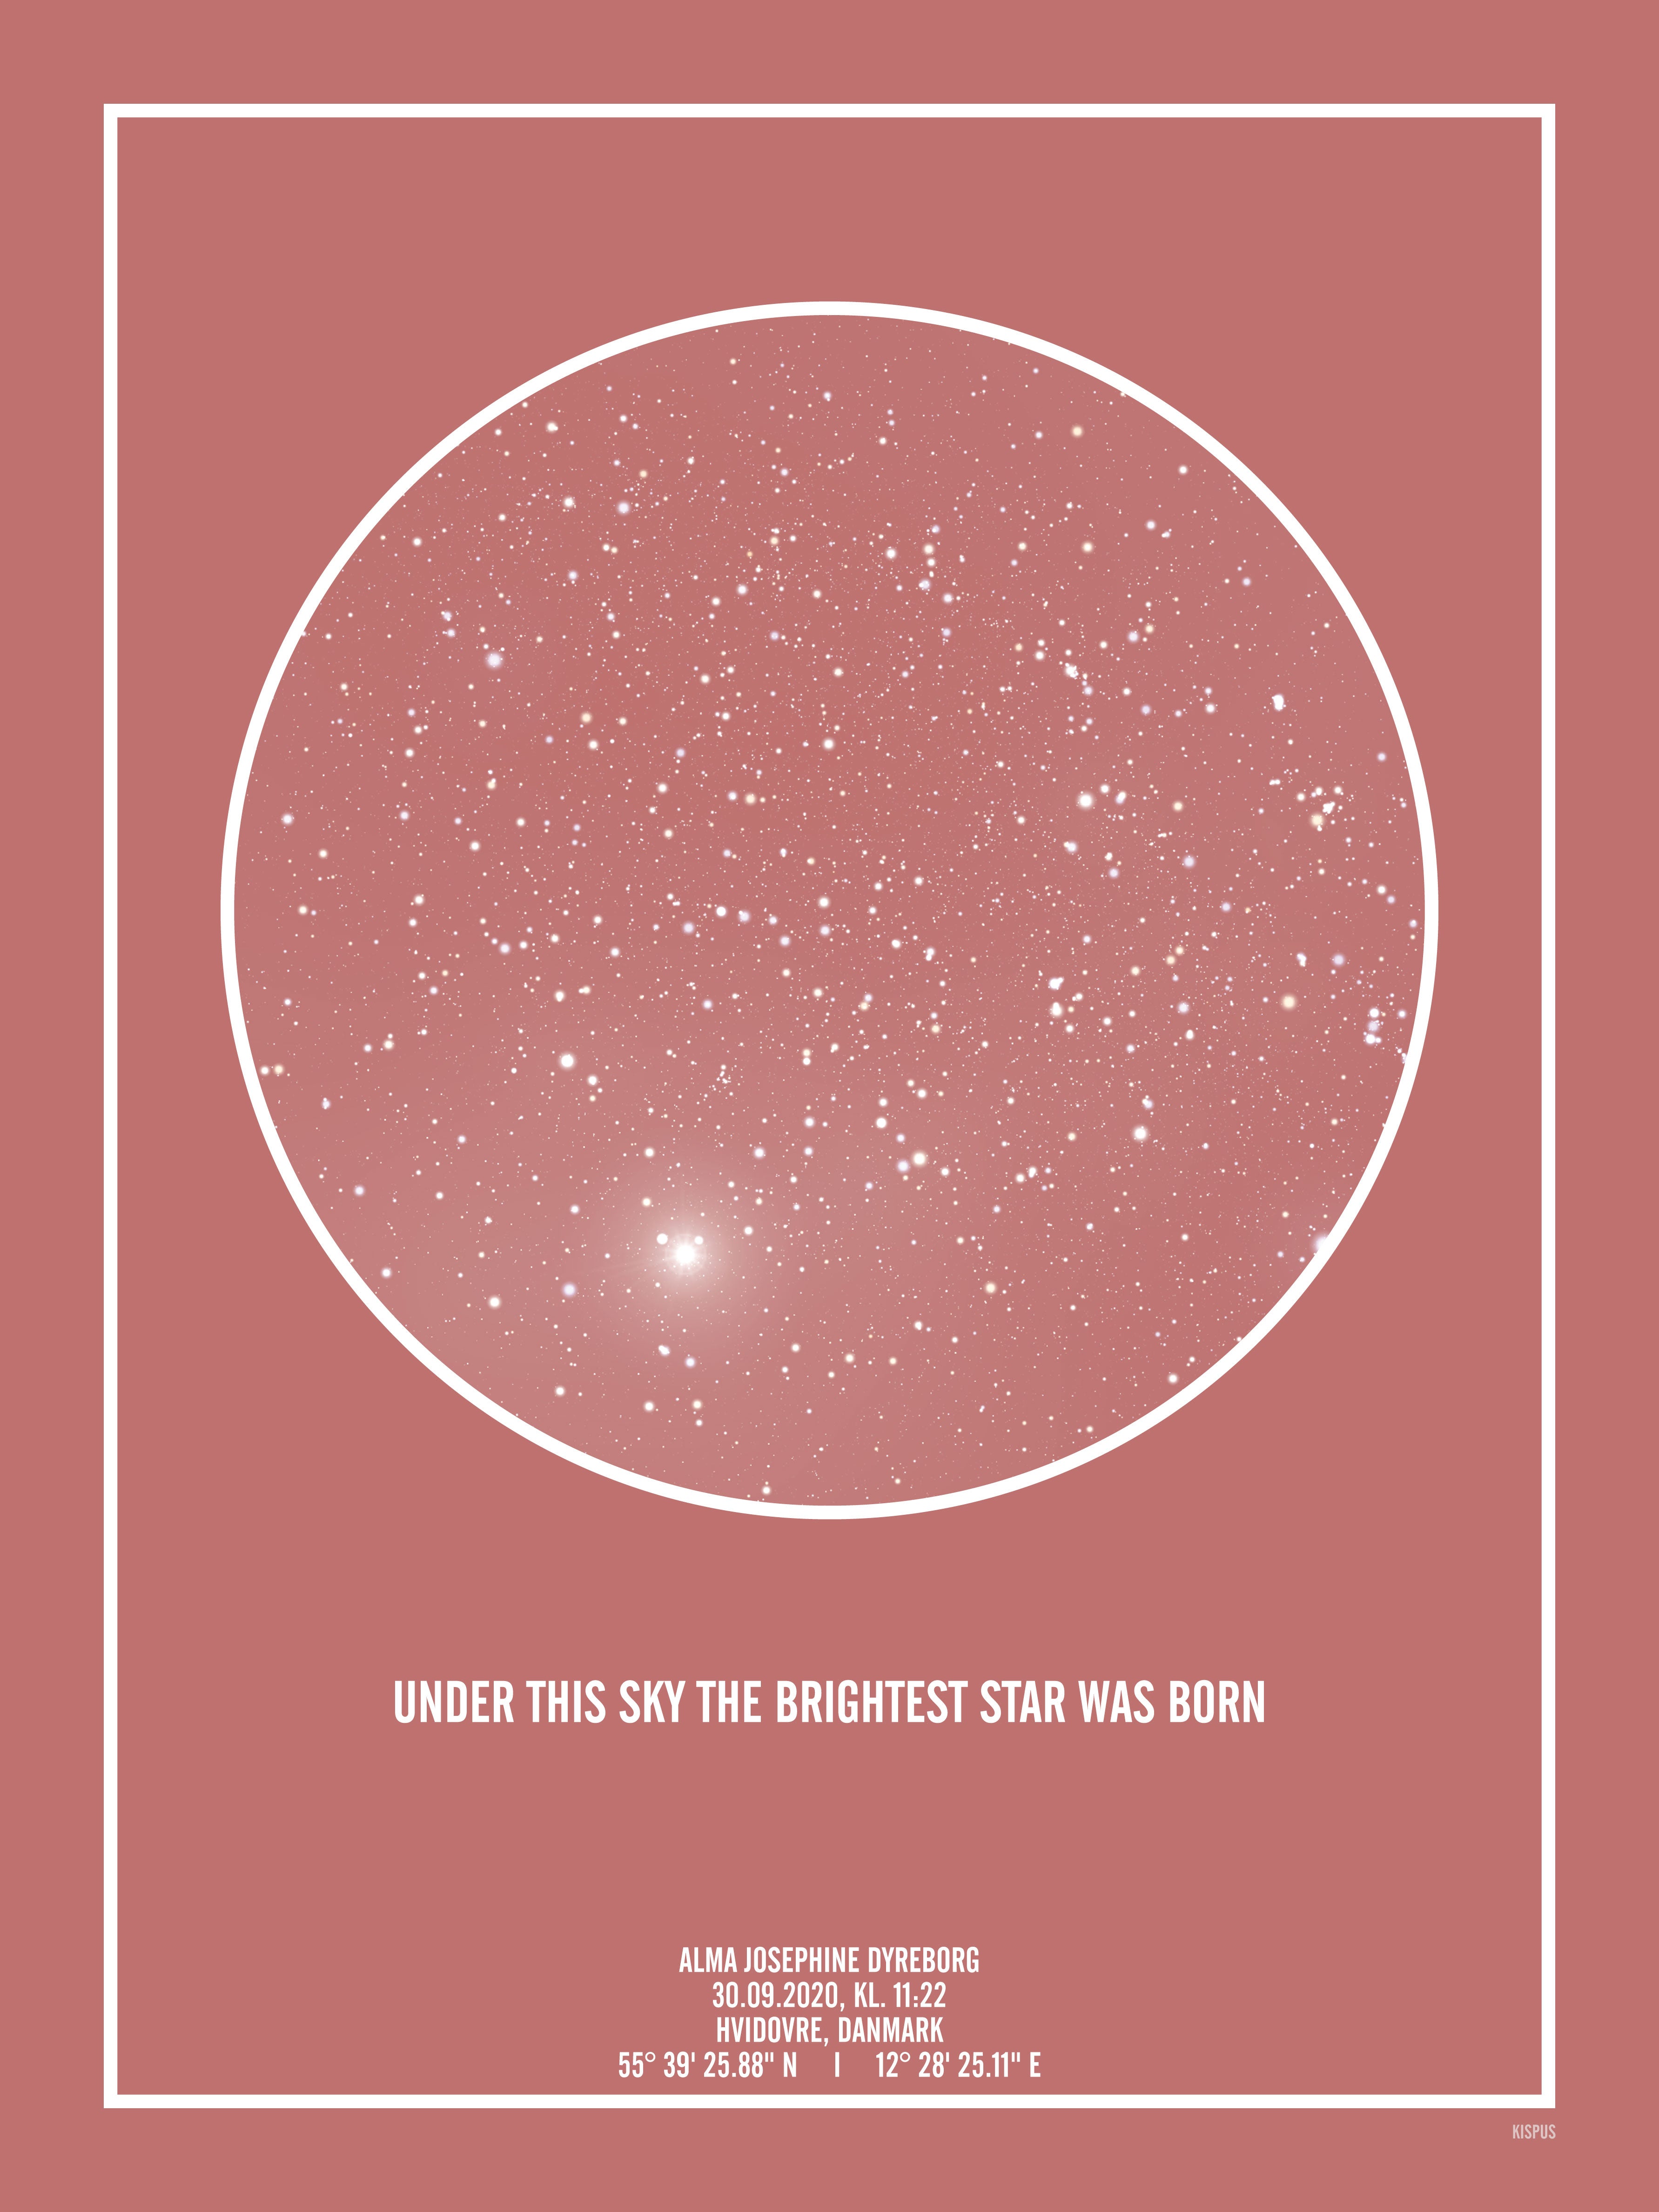 Se PERSONLIG STJERNEHIMMEL PLAKAT (BLUSH) - 30x40 / Hvid tekst + blush-farvet stjernehimmel / Klar stjernehimmel hos KISPUS